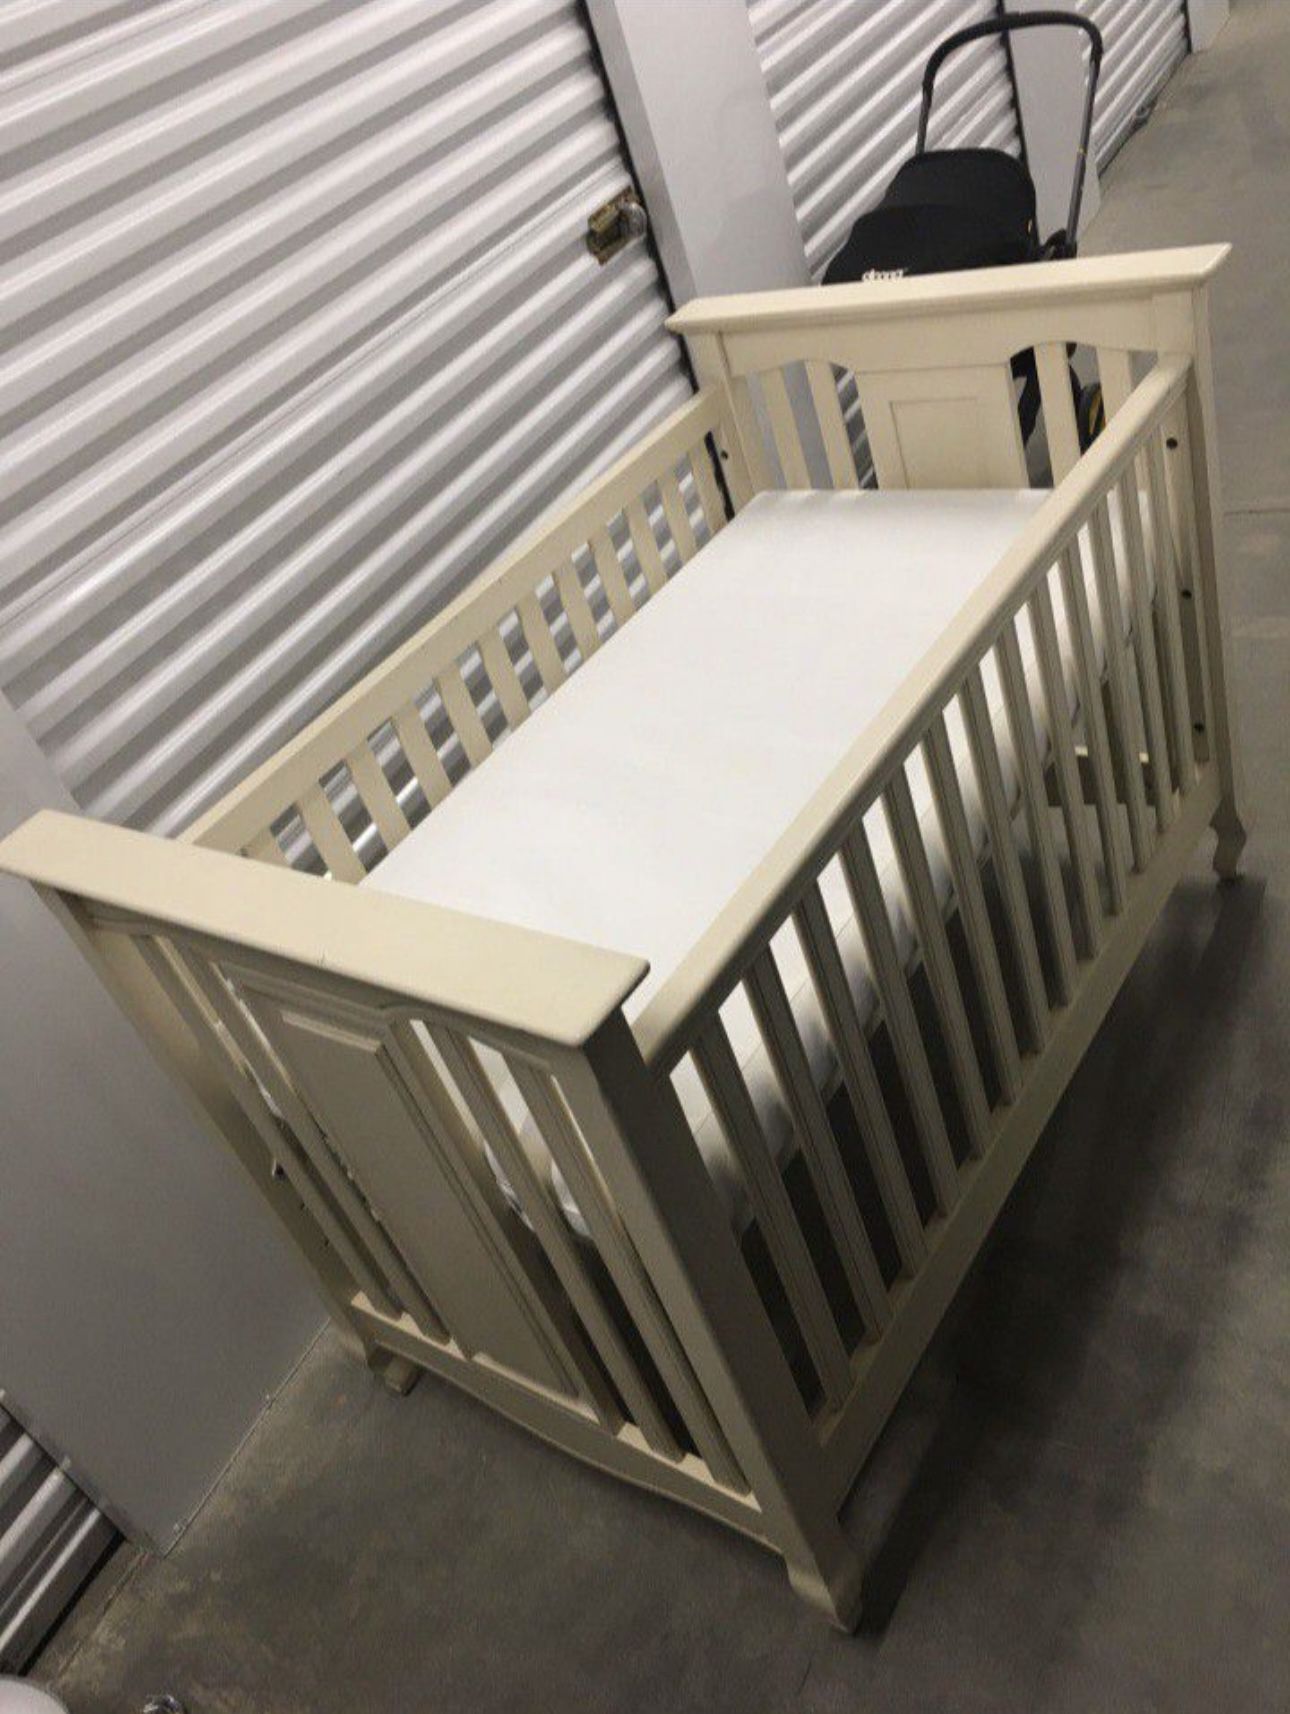 Baby Crib W/mattress